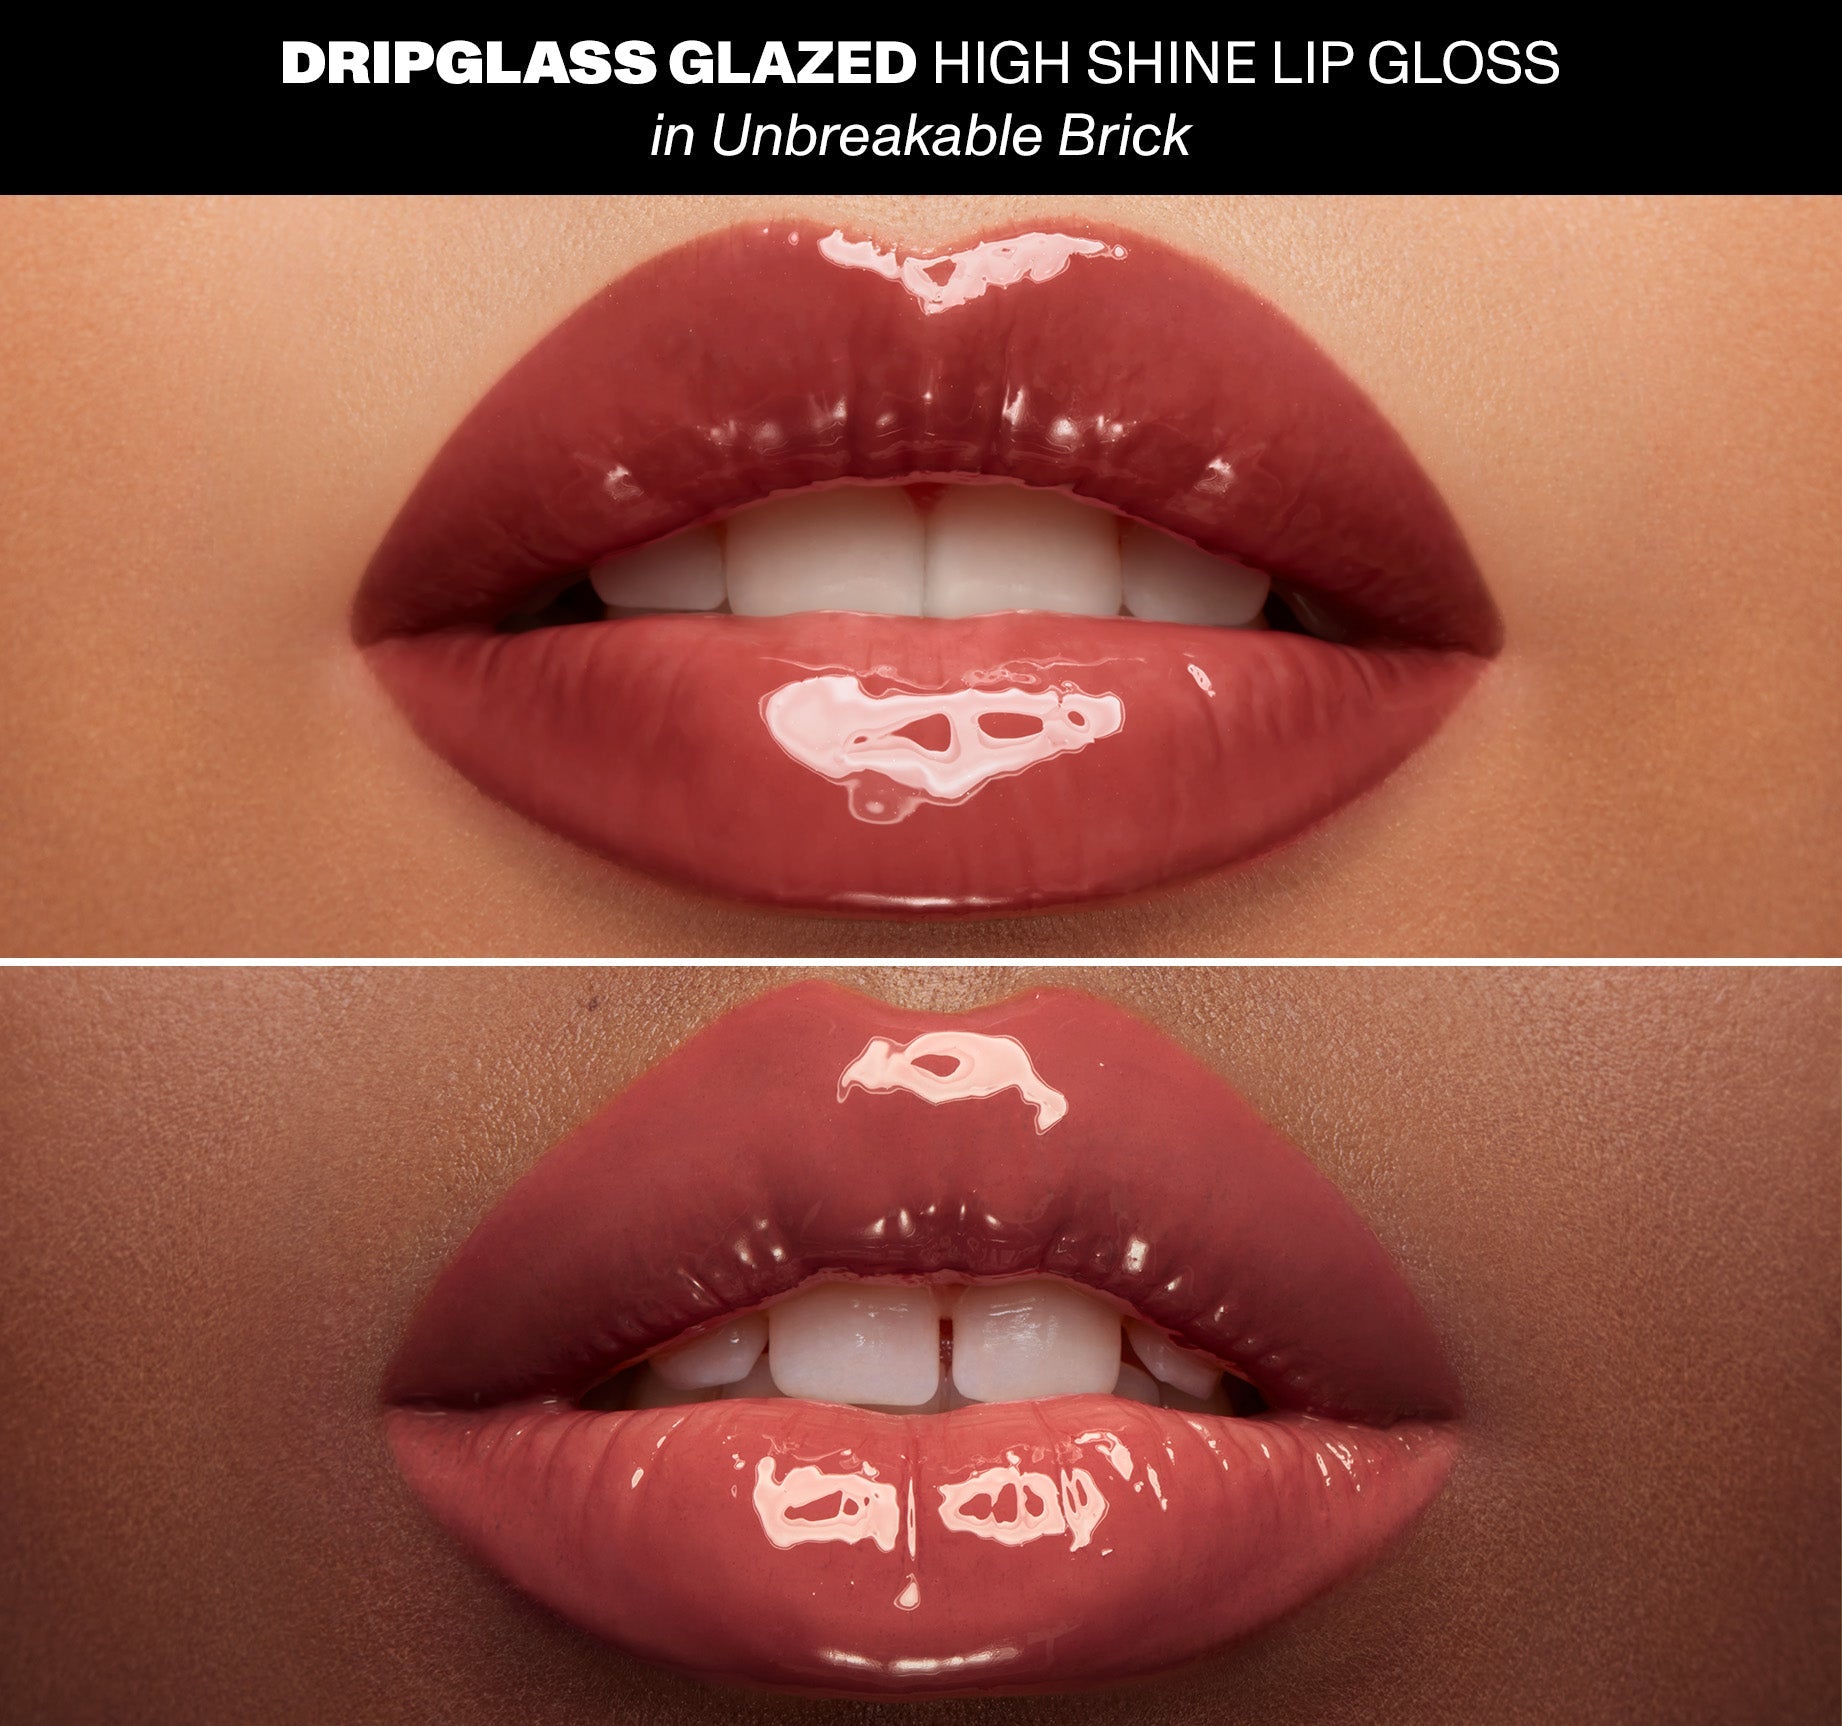 Dripglass Glazed High Shine Lip Gloss - Unbreakable Brick - Image 5